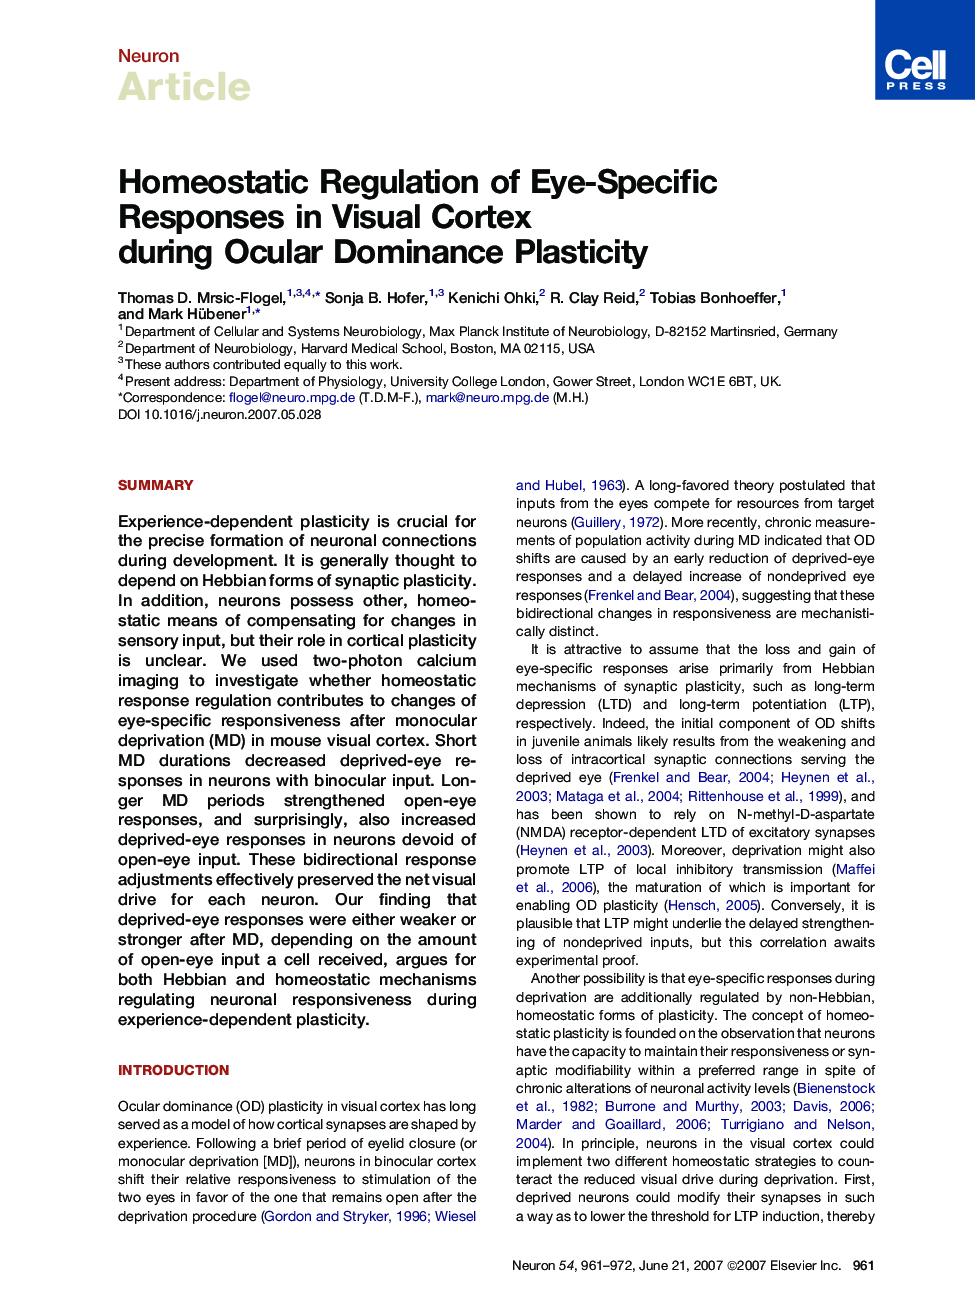 Homeostatic Regulation of Eye-Specific Responses in Visual Cortex during Ocular Dominance Plasticity